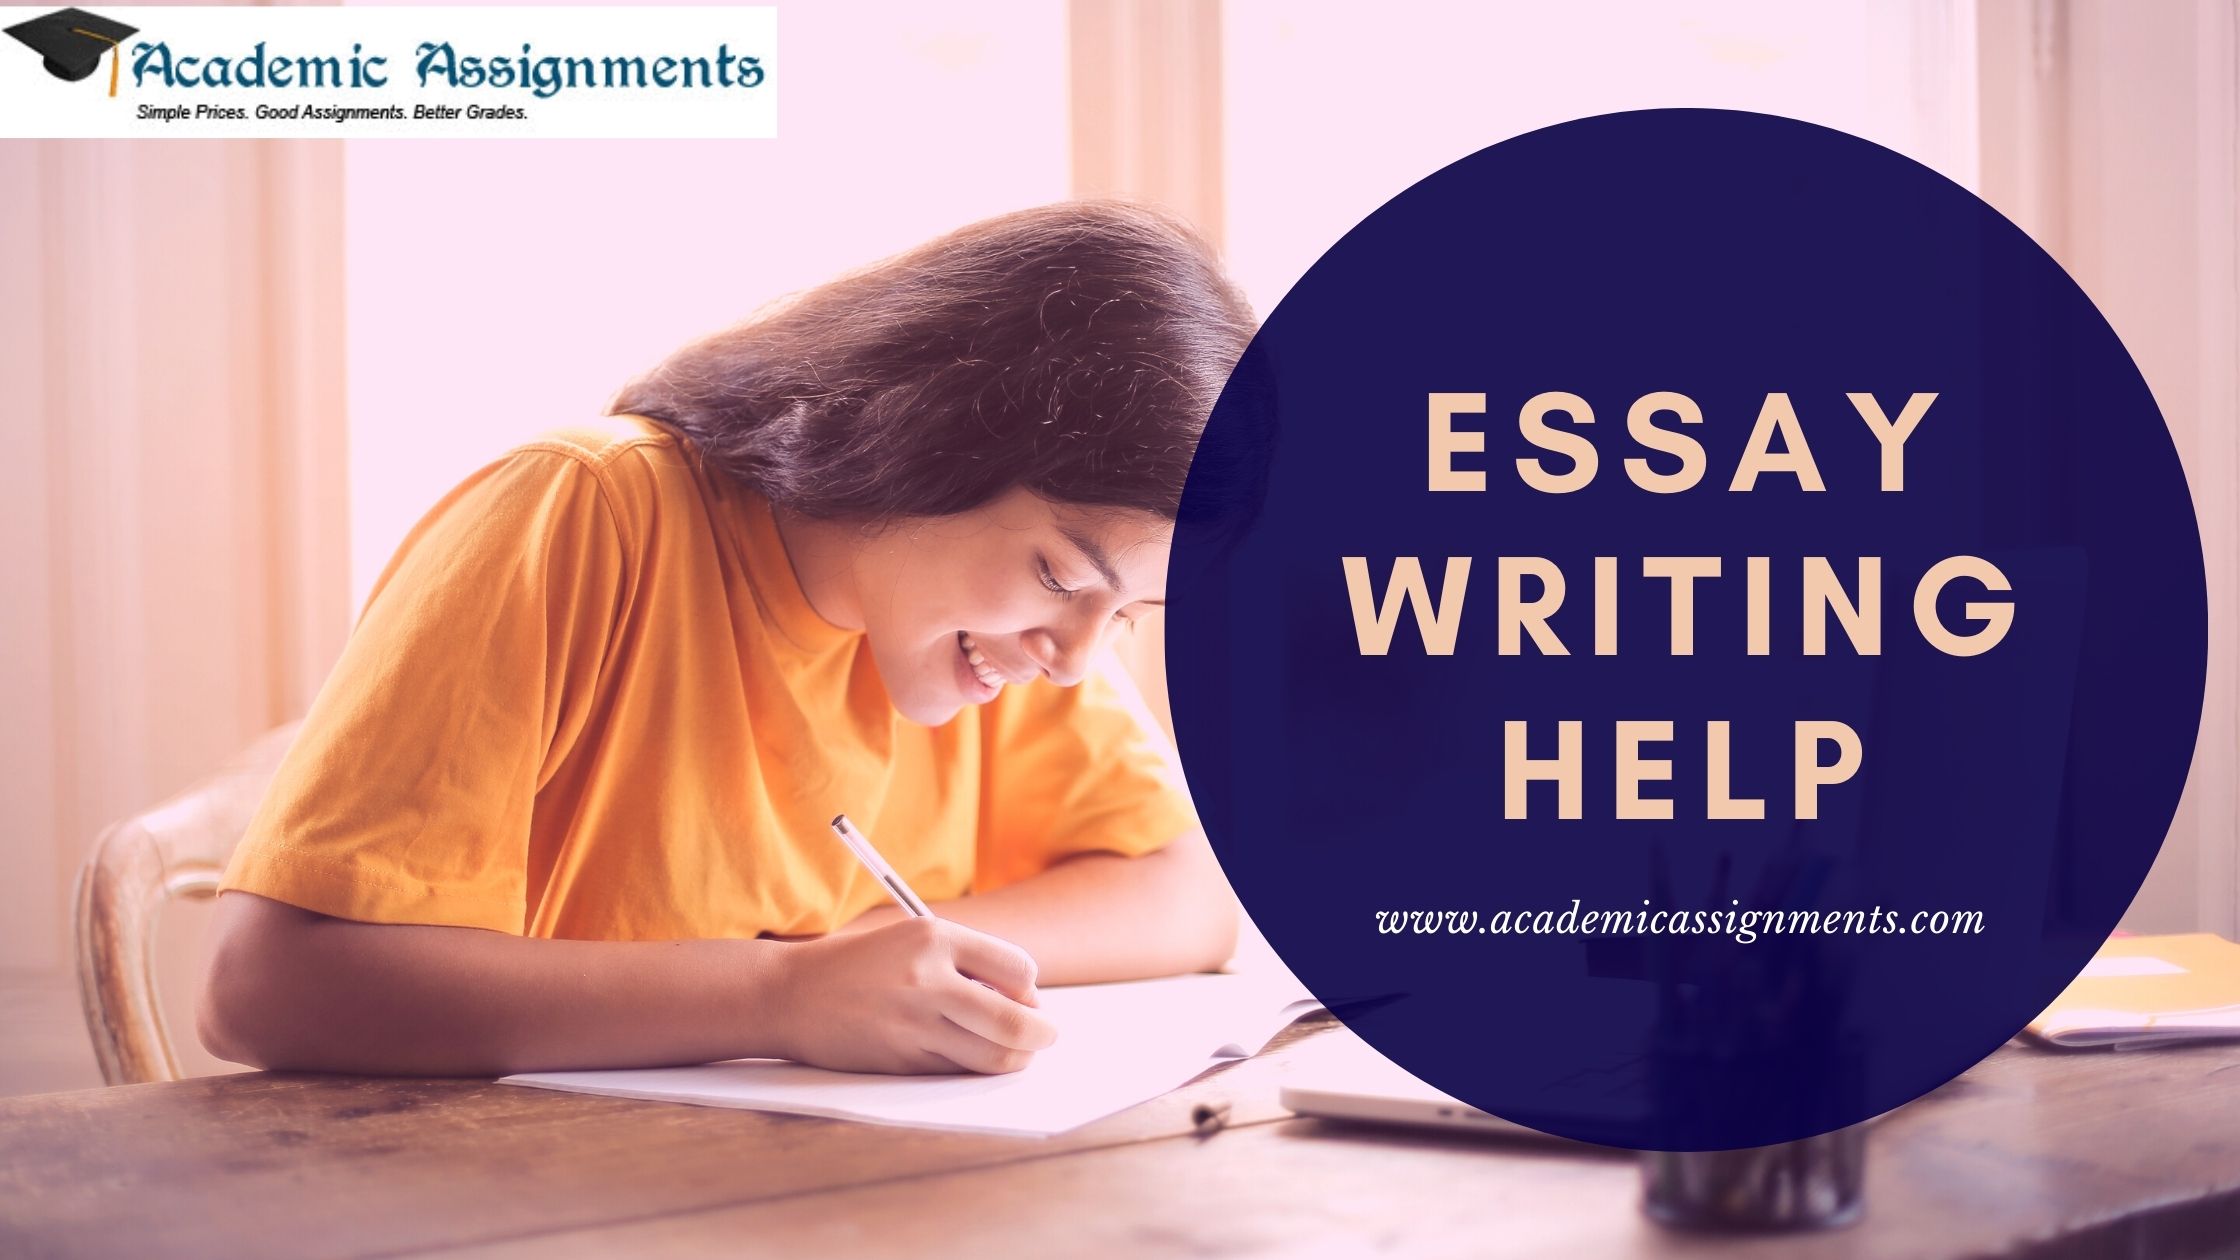 Essay Writing Help